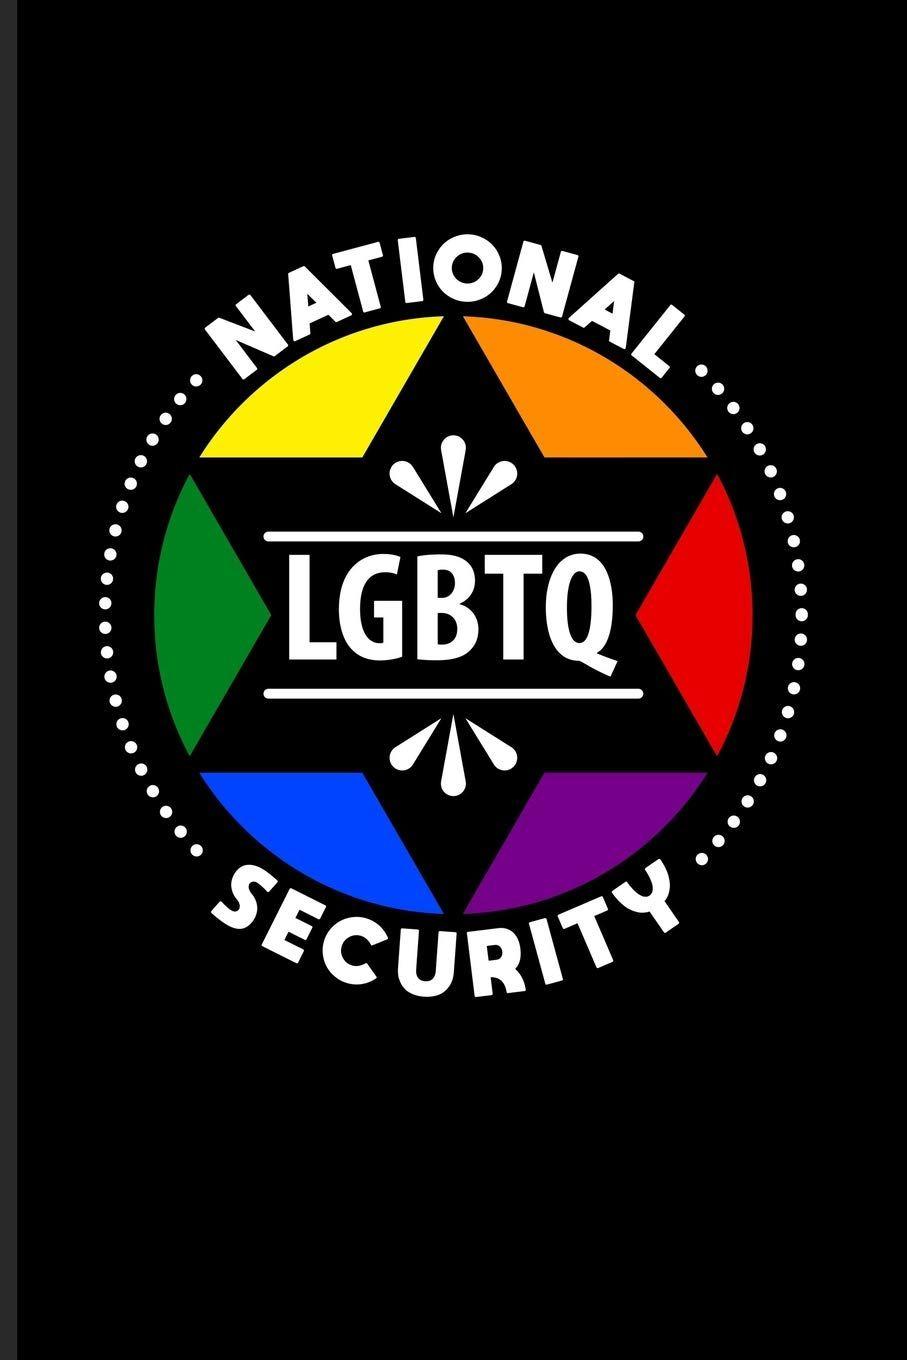 LGBTQ Logo - National LGBTQ Security: Rainbow Club Logo Journal For Lgbtq Rights ...